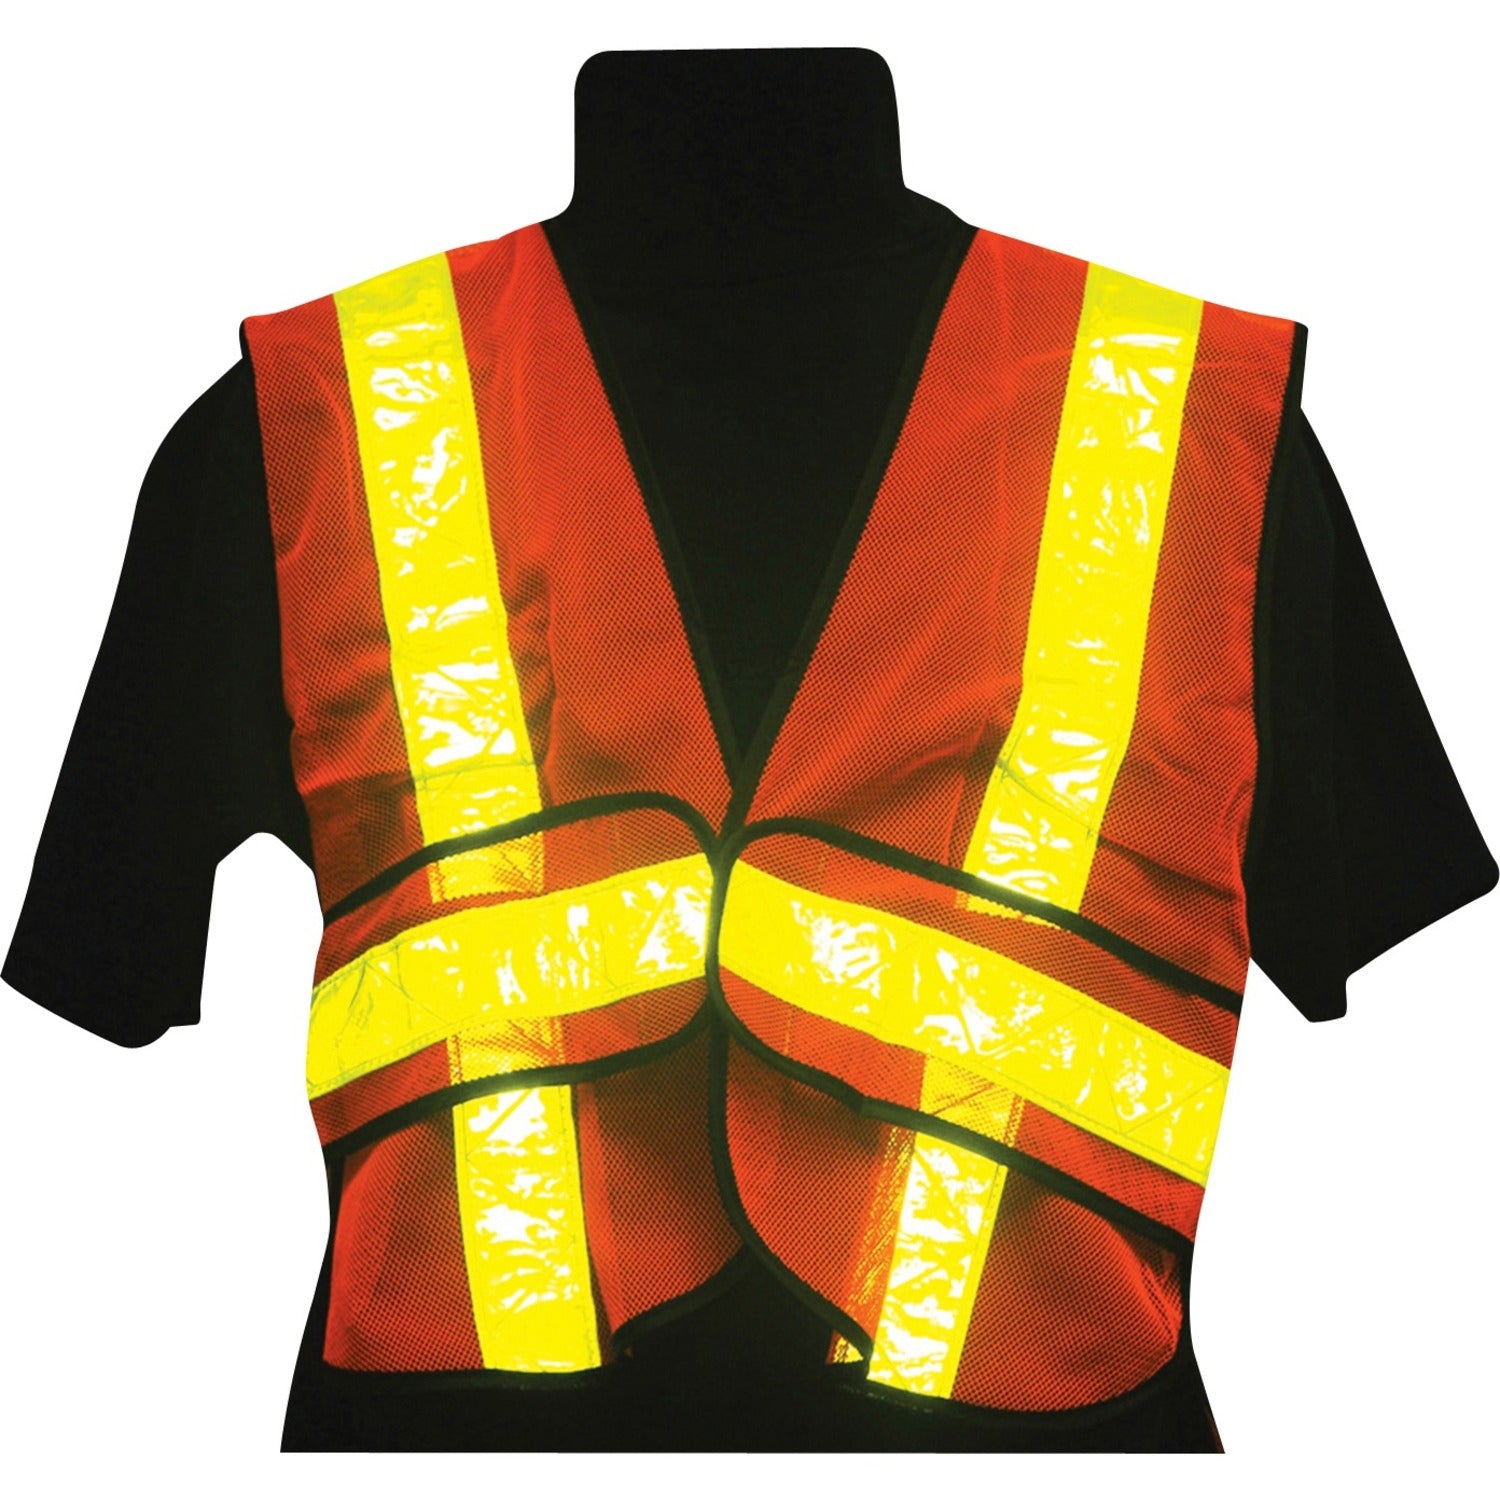 RONCO High-Viz Traffic Vest